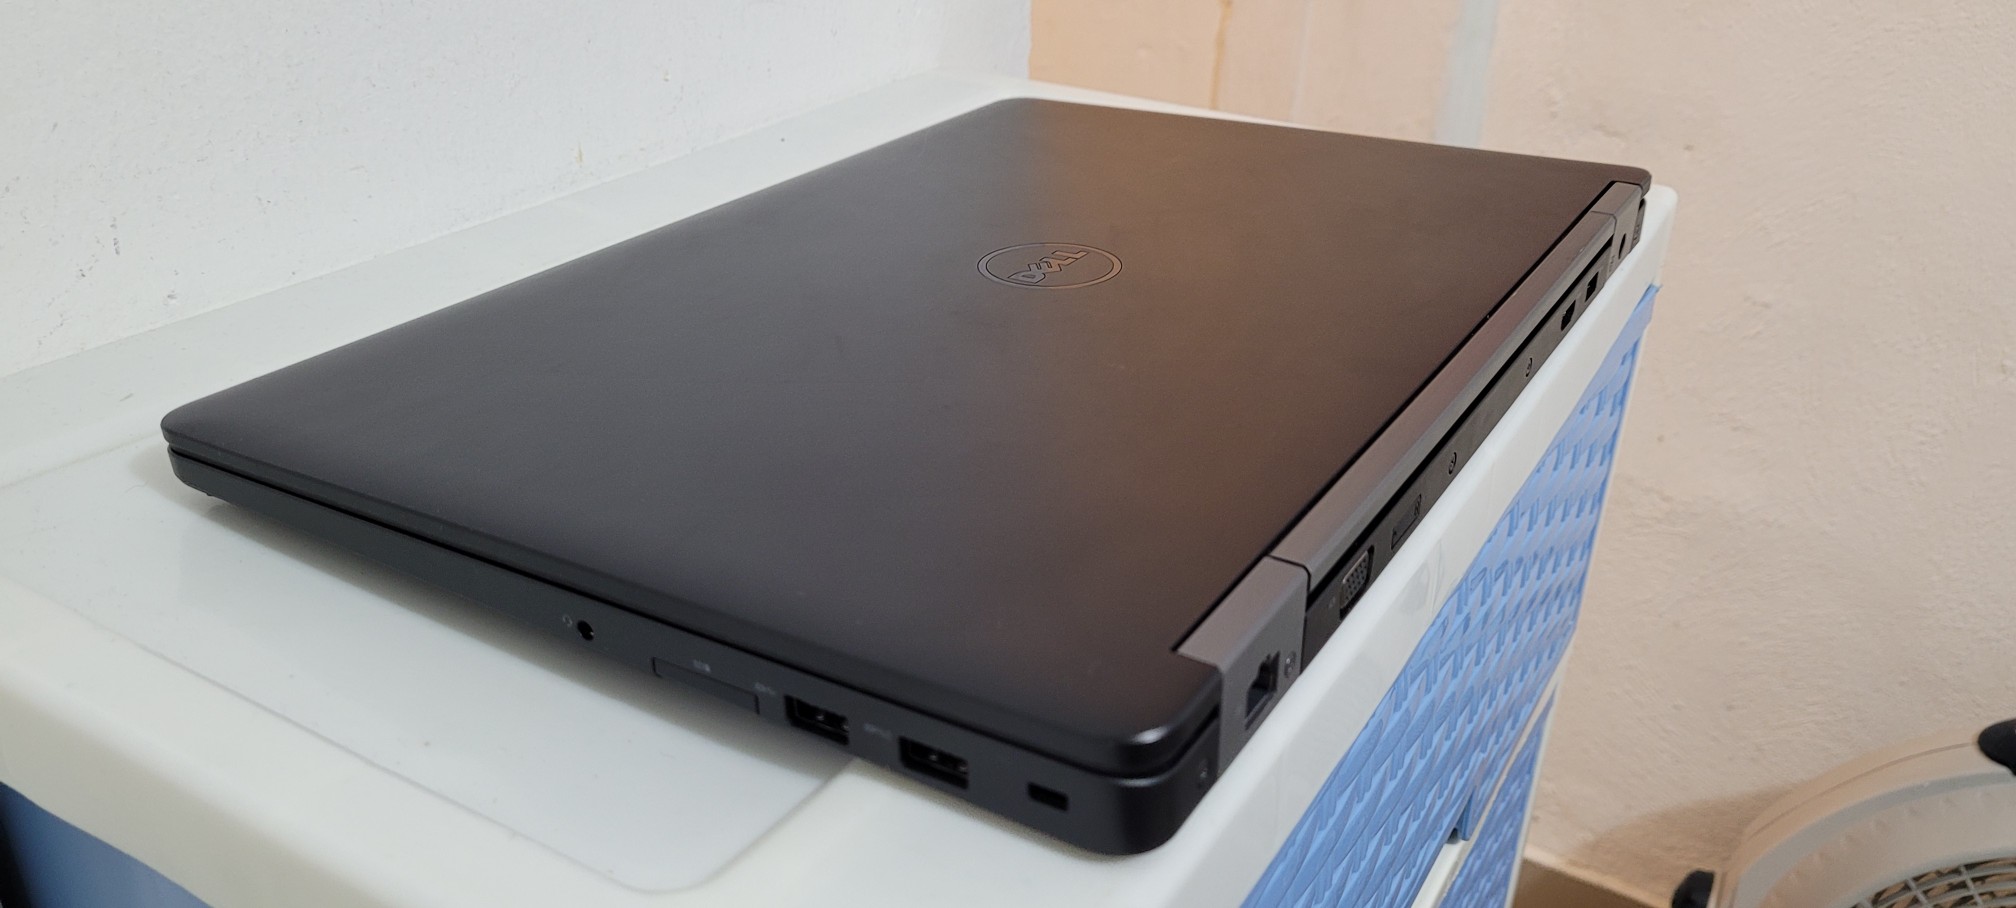 computadoras y laptops - Dell 5570 17 Pulg Core i5 6ta Gen Ram 8gb Disco 128gb SSD Y 500GB HD 2